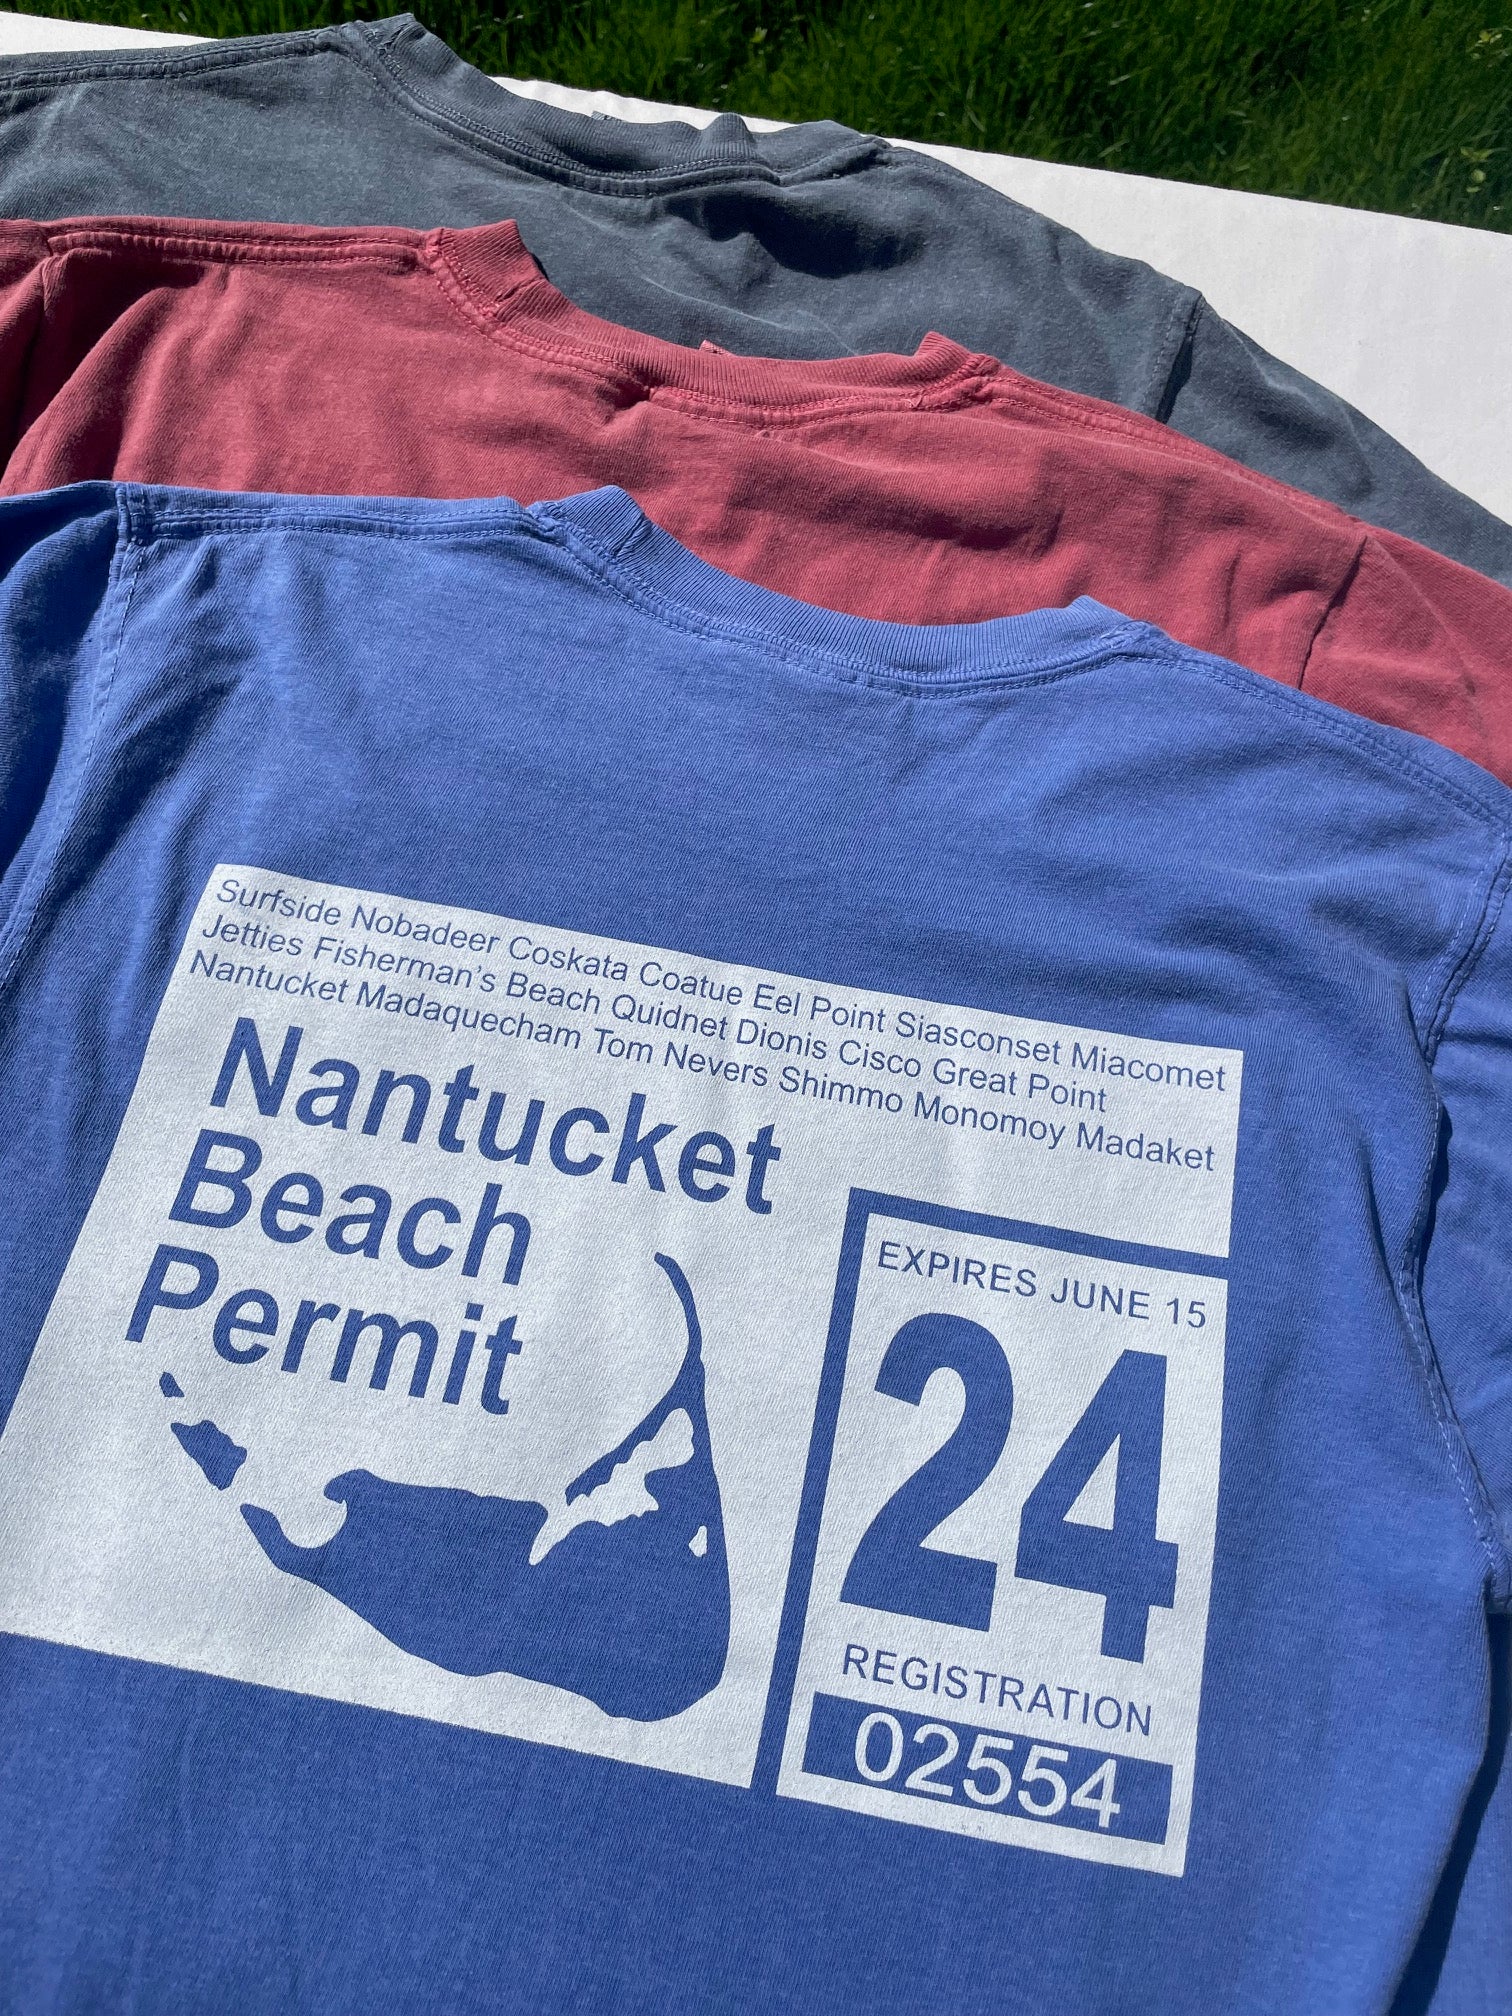 '24 Nantucket Beach Permit Tee in Island Red